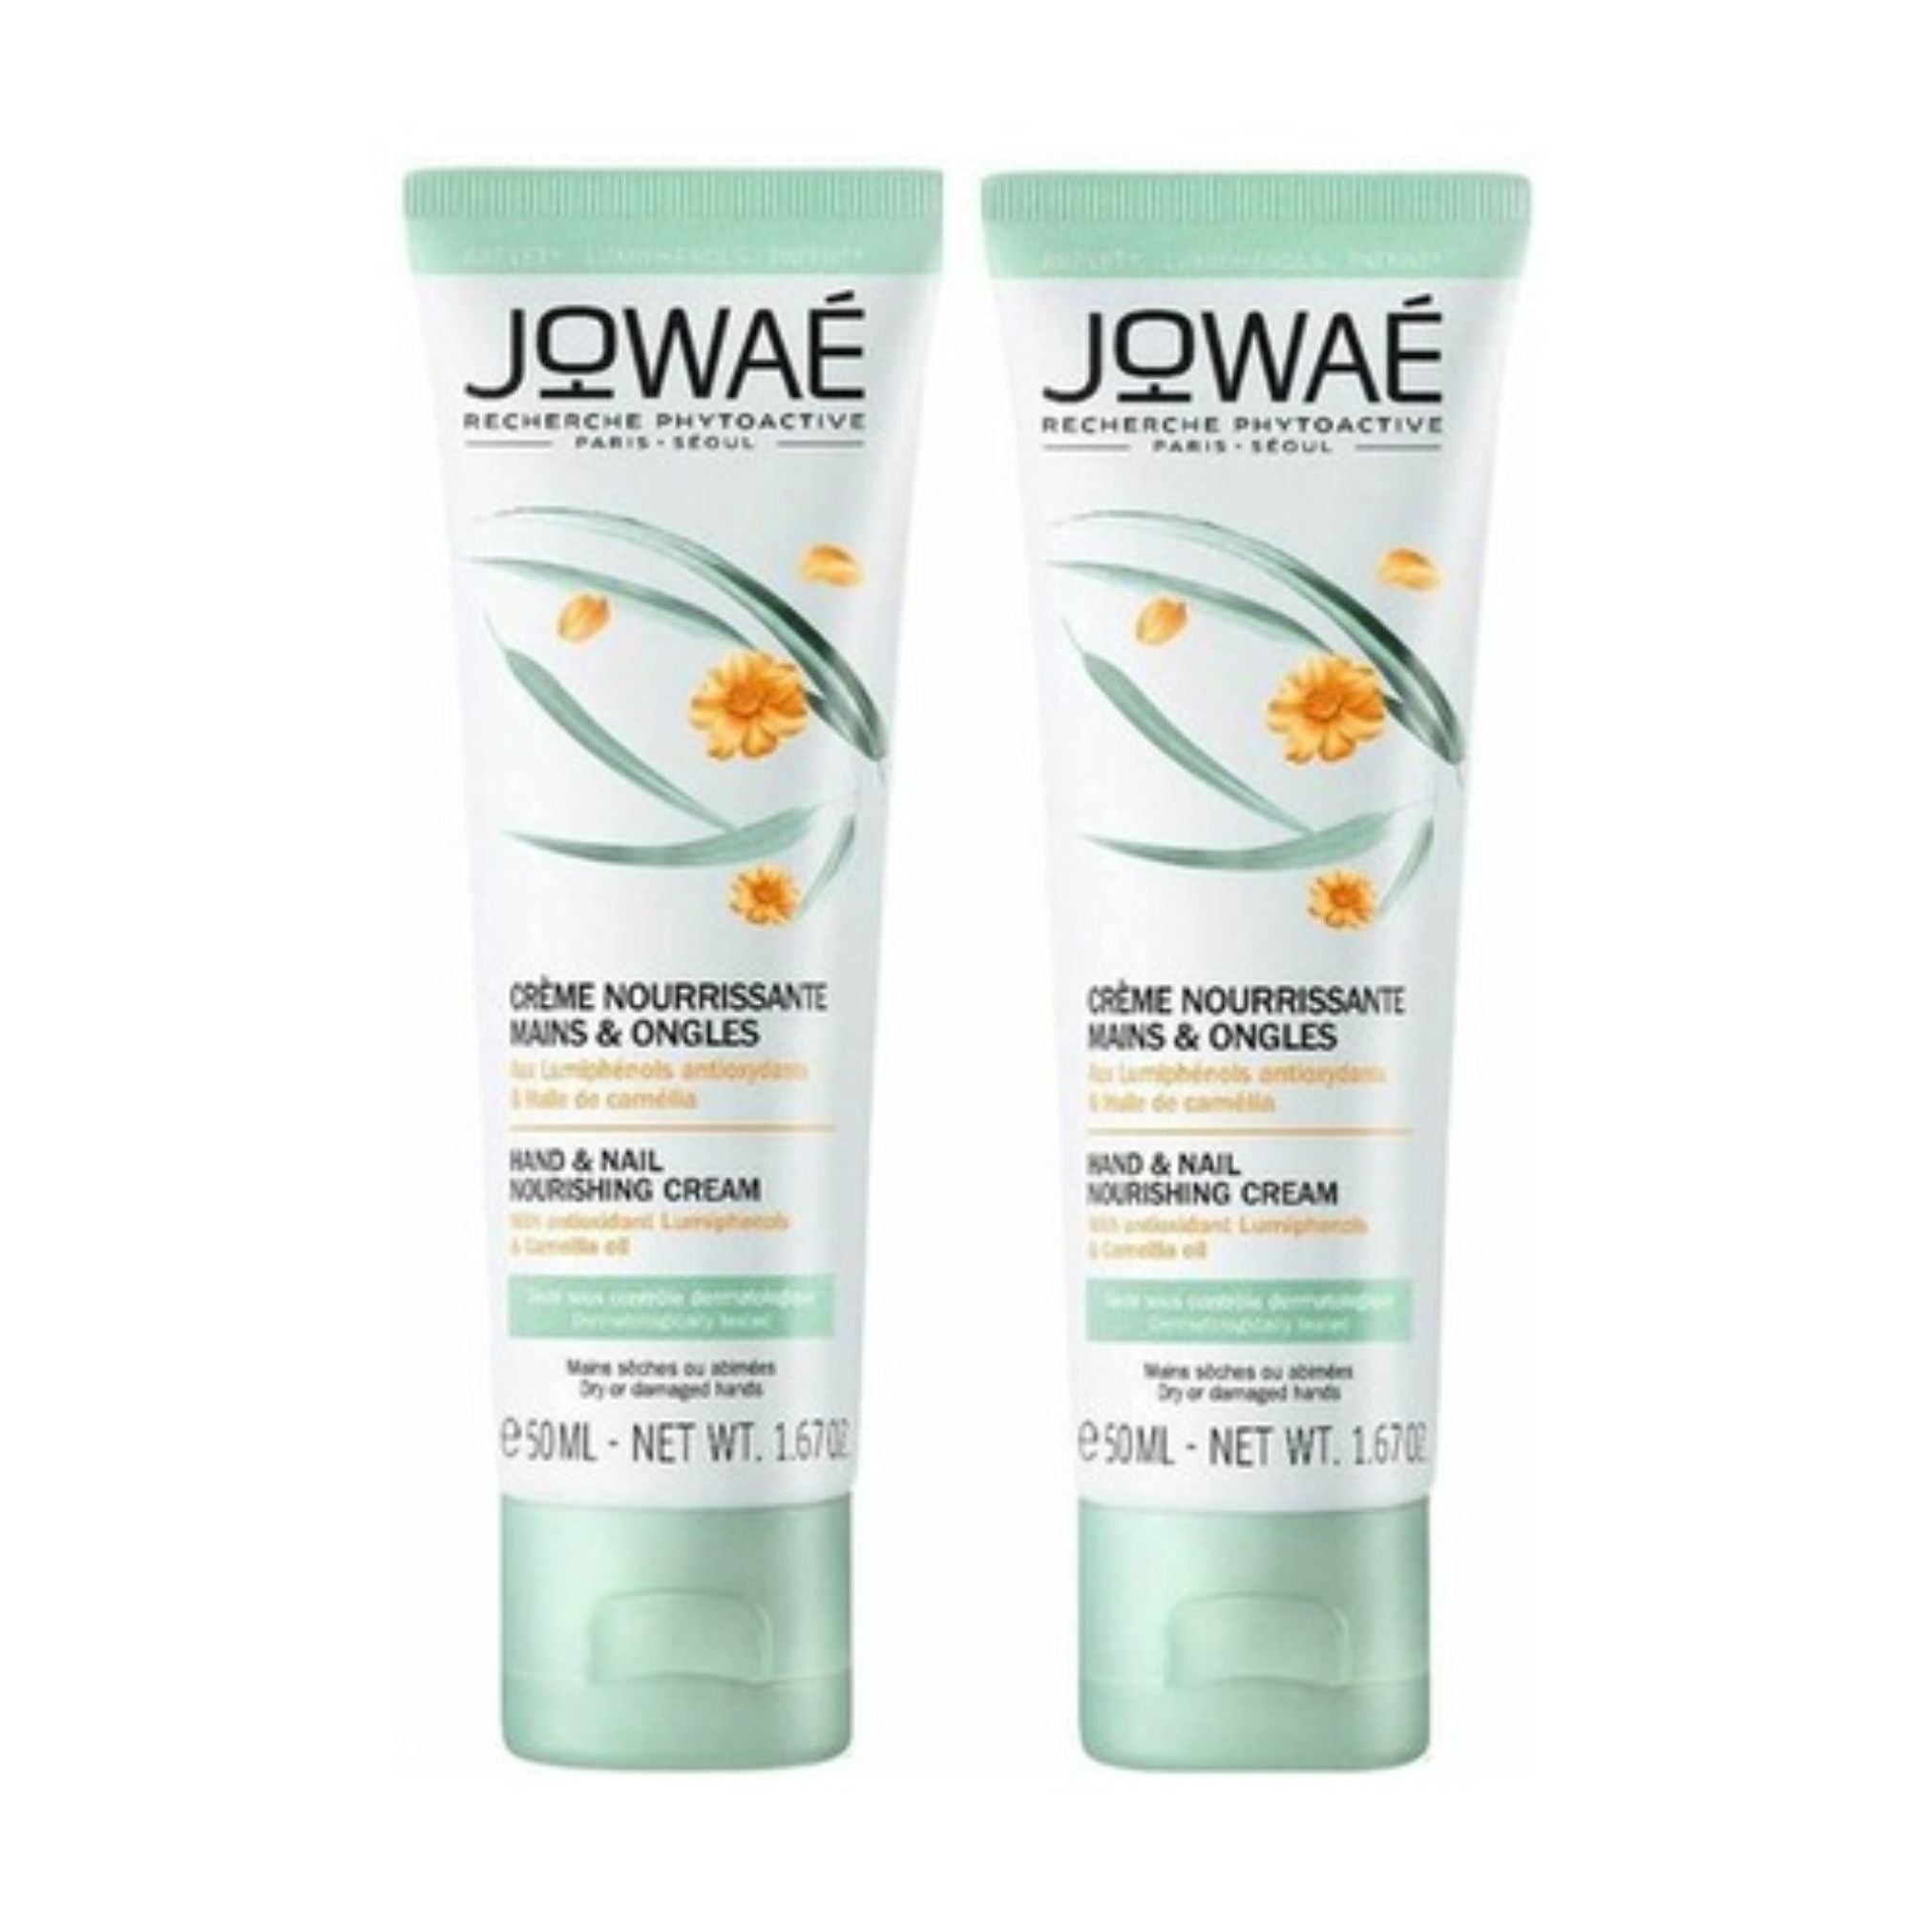 Jowaé Pack Promocional: Jowaé Creme Nutritivo Mãos e Unhas 2x50ml